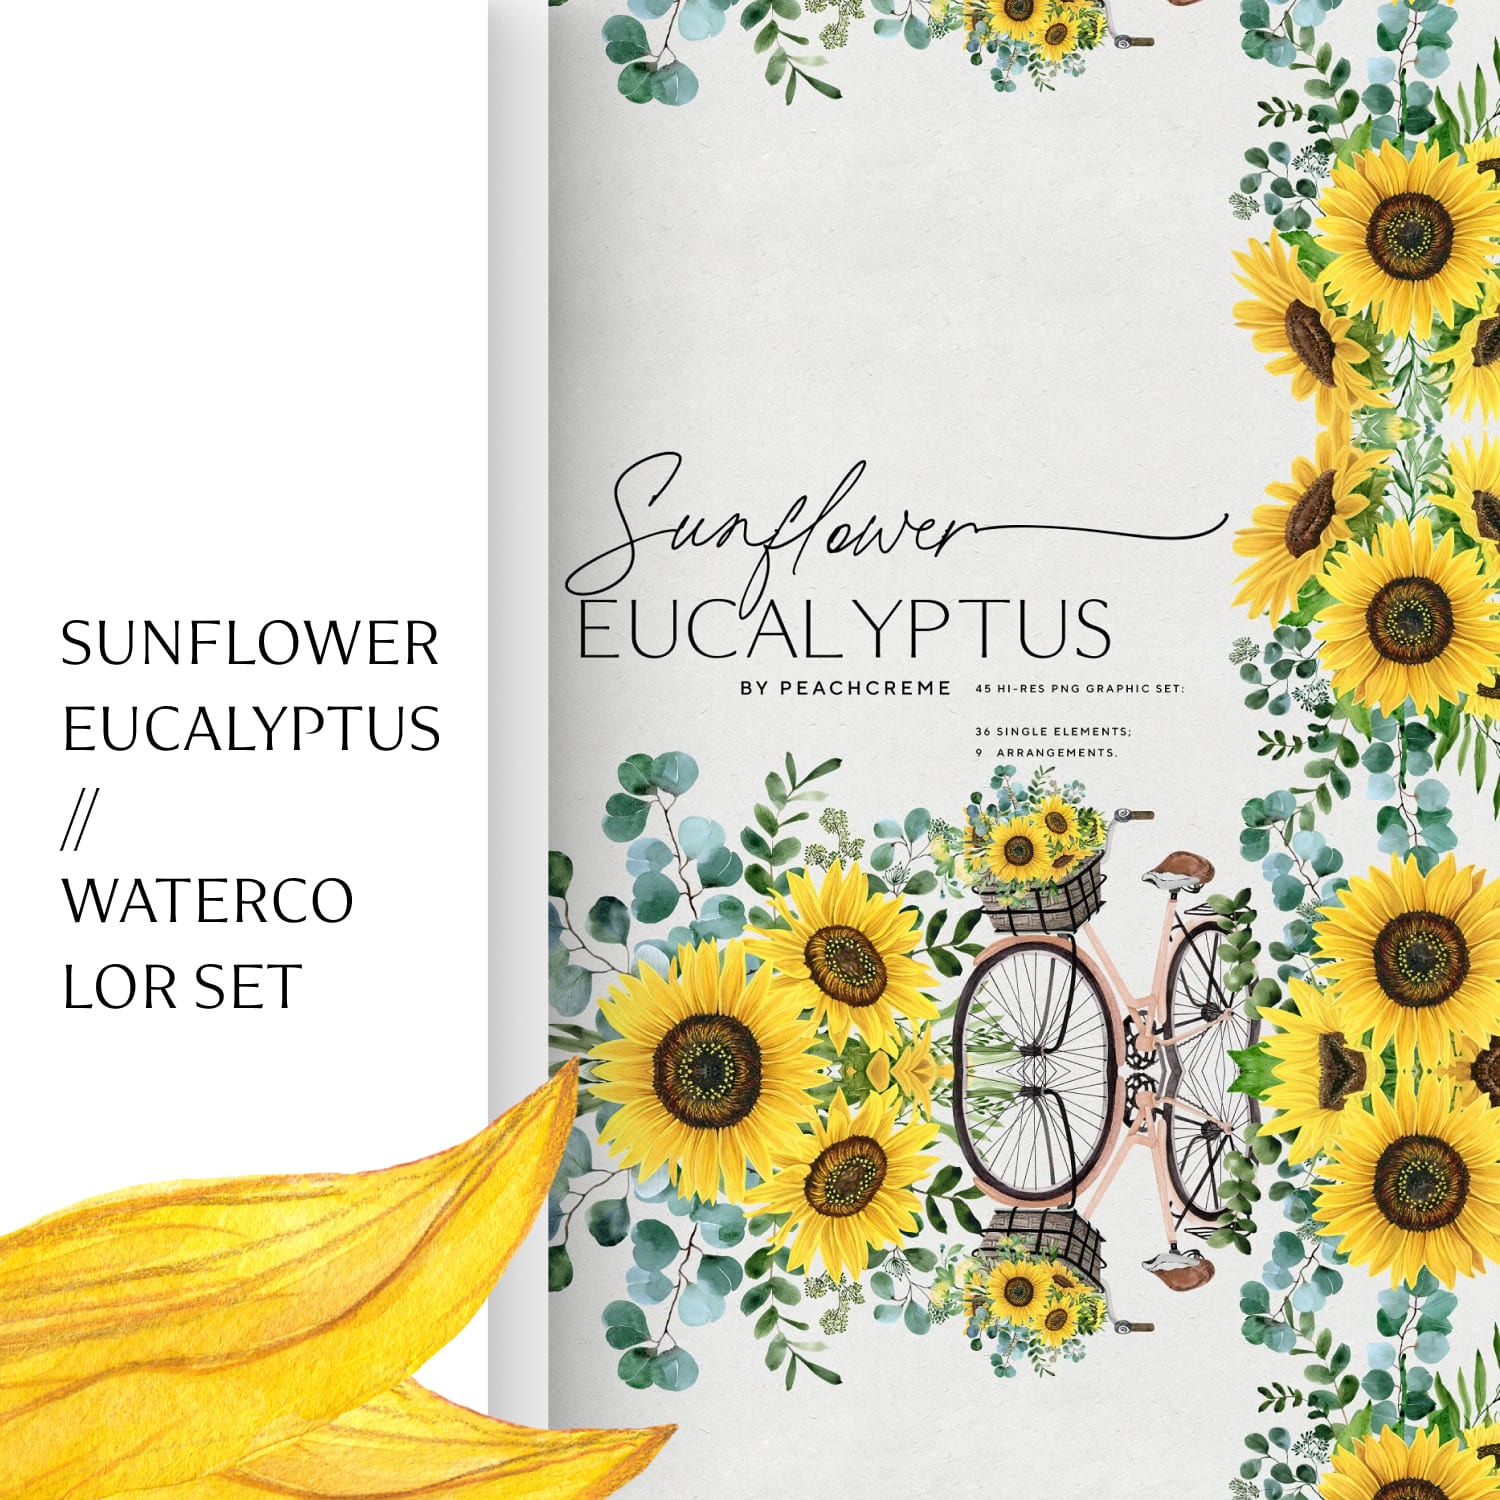 Sunflower Eucalyptus//Watercolor Set.